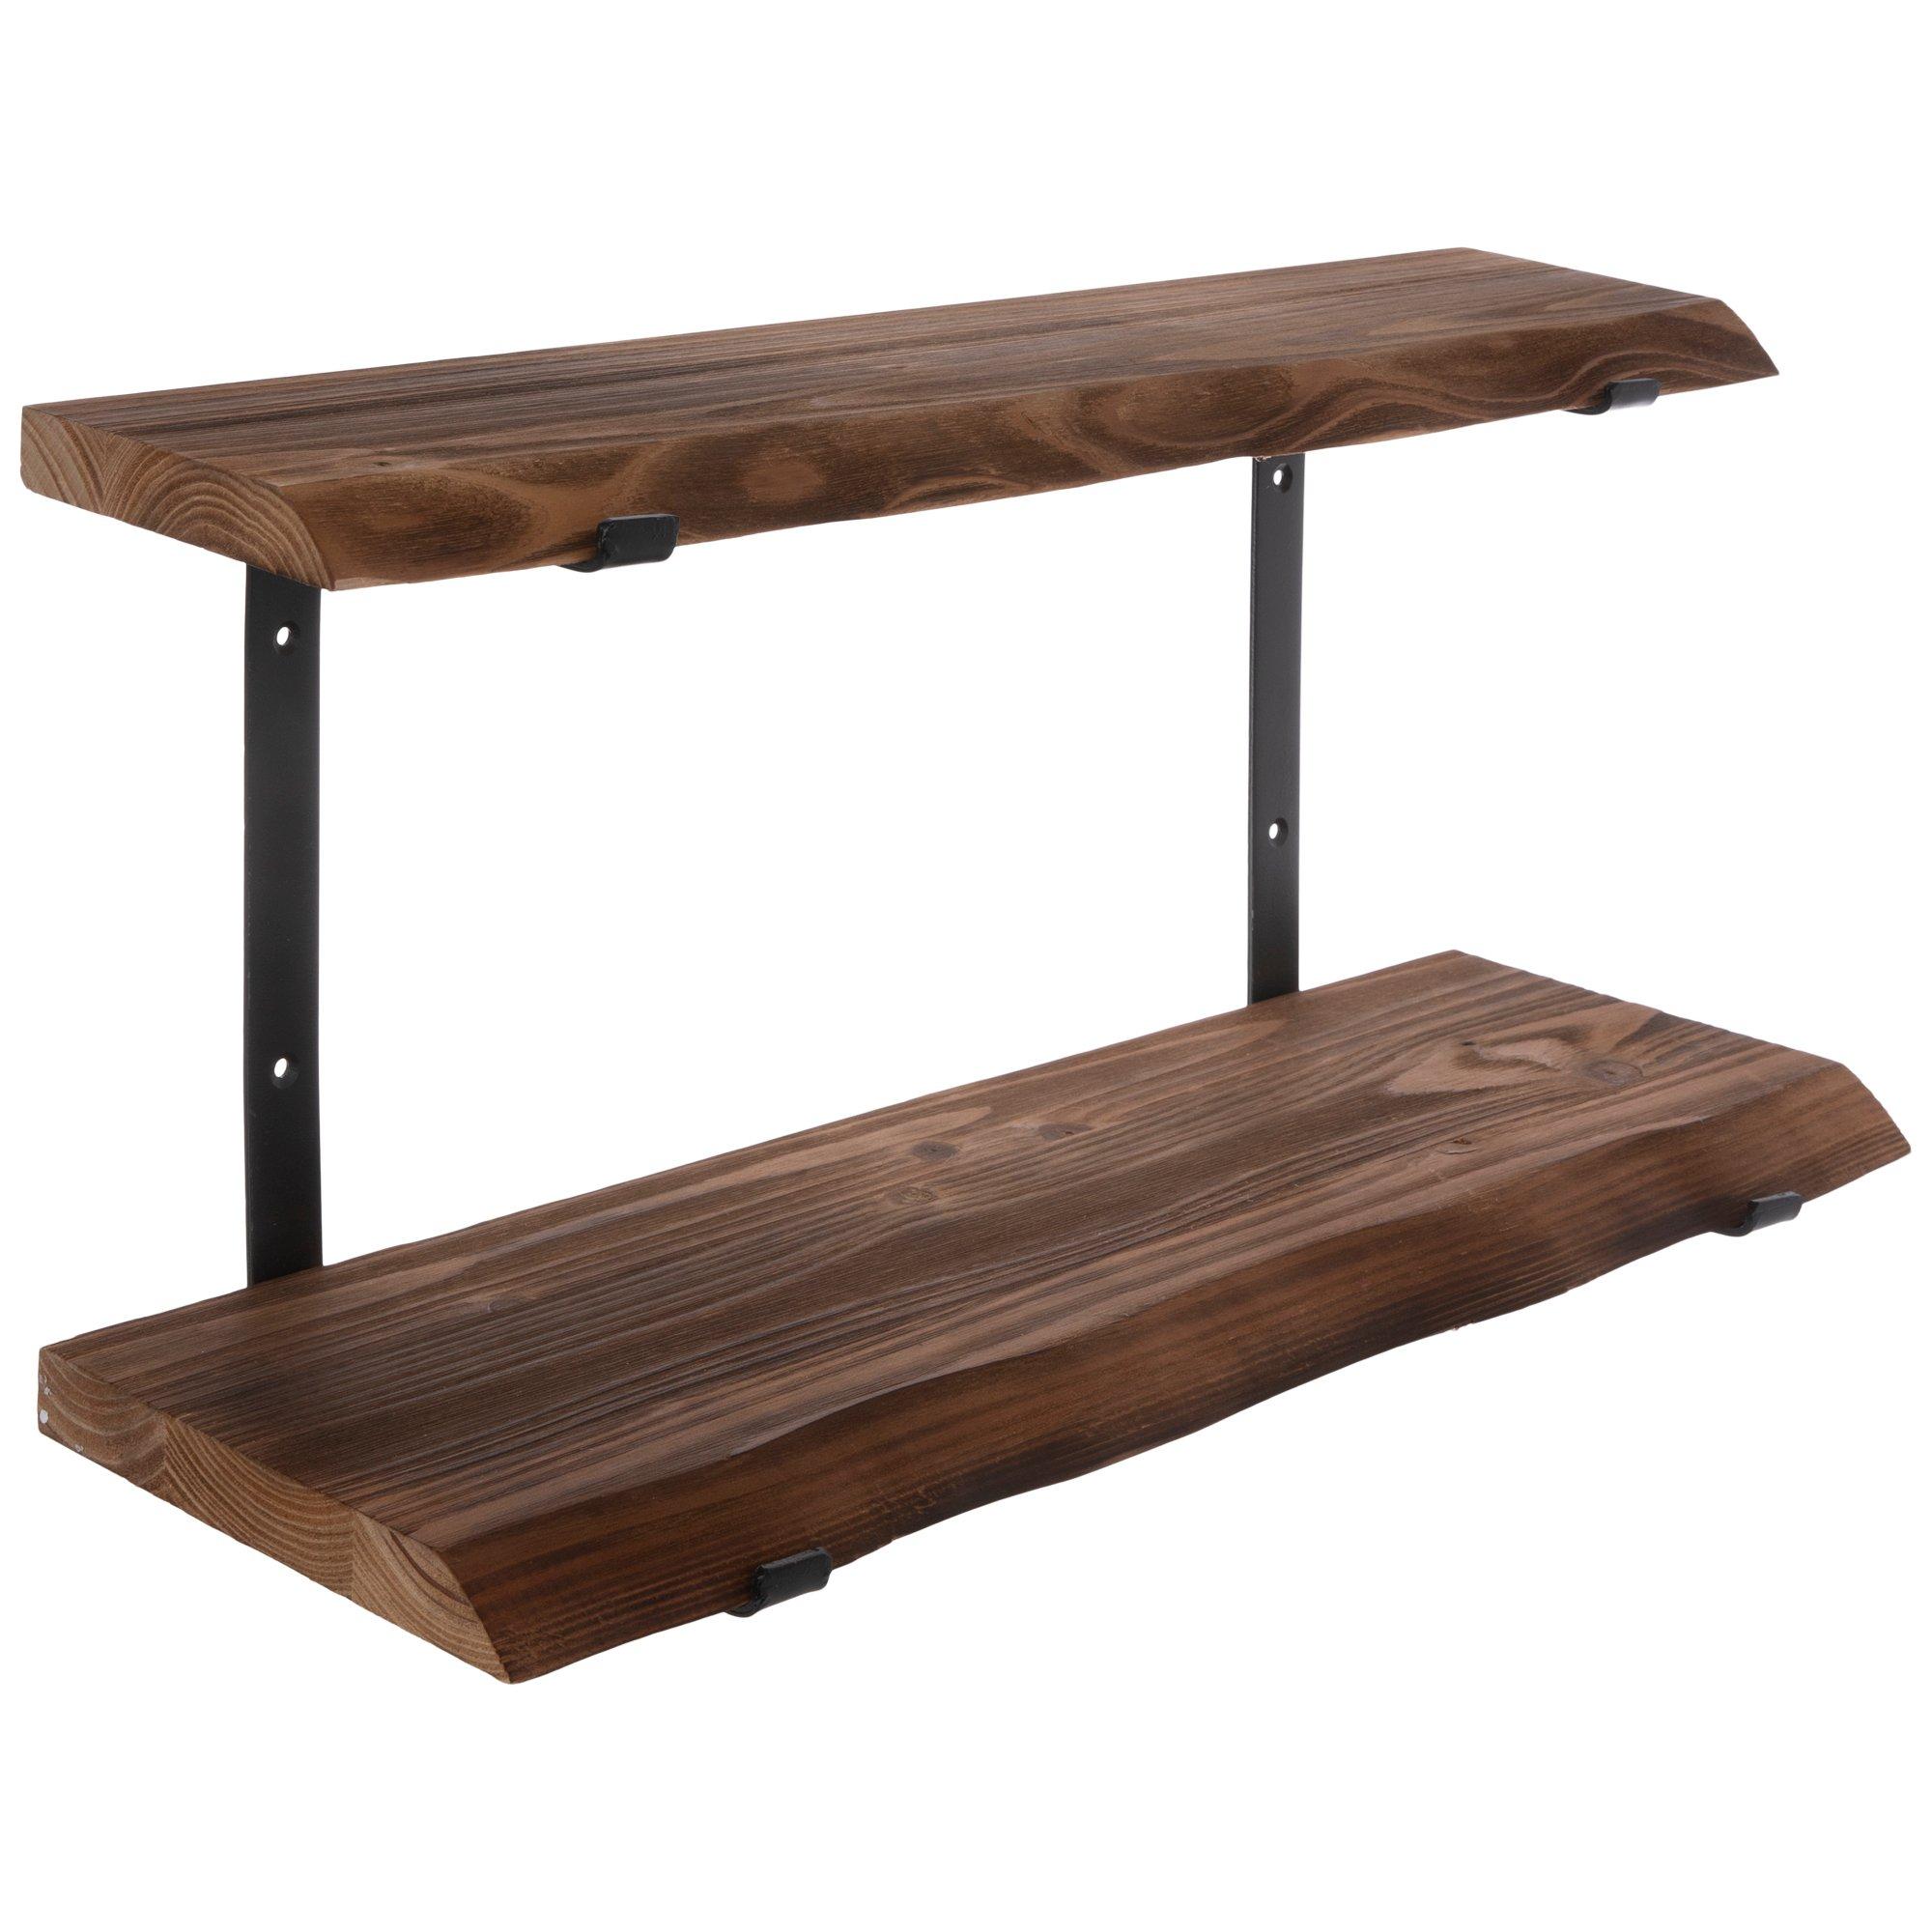 Industrial Three-Tiered Wood Shelf, Hobby Lobby